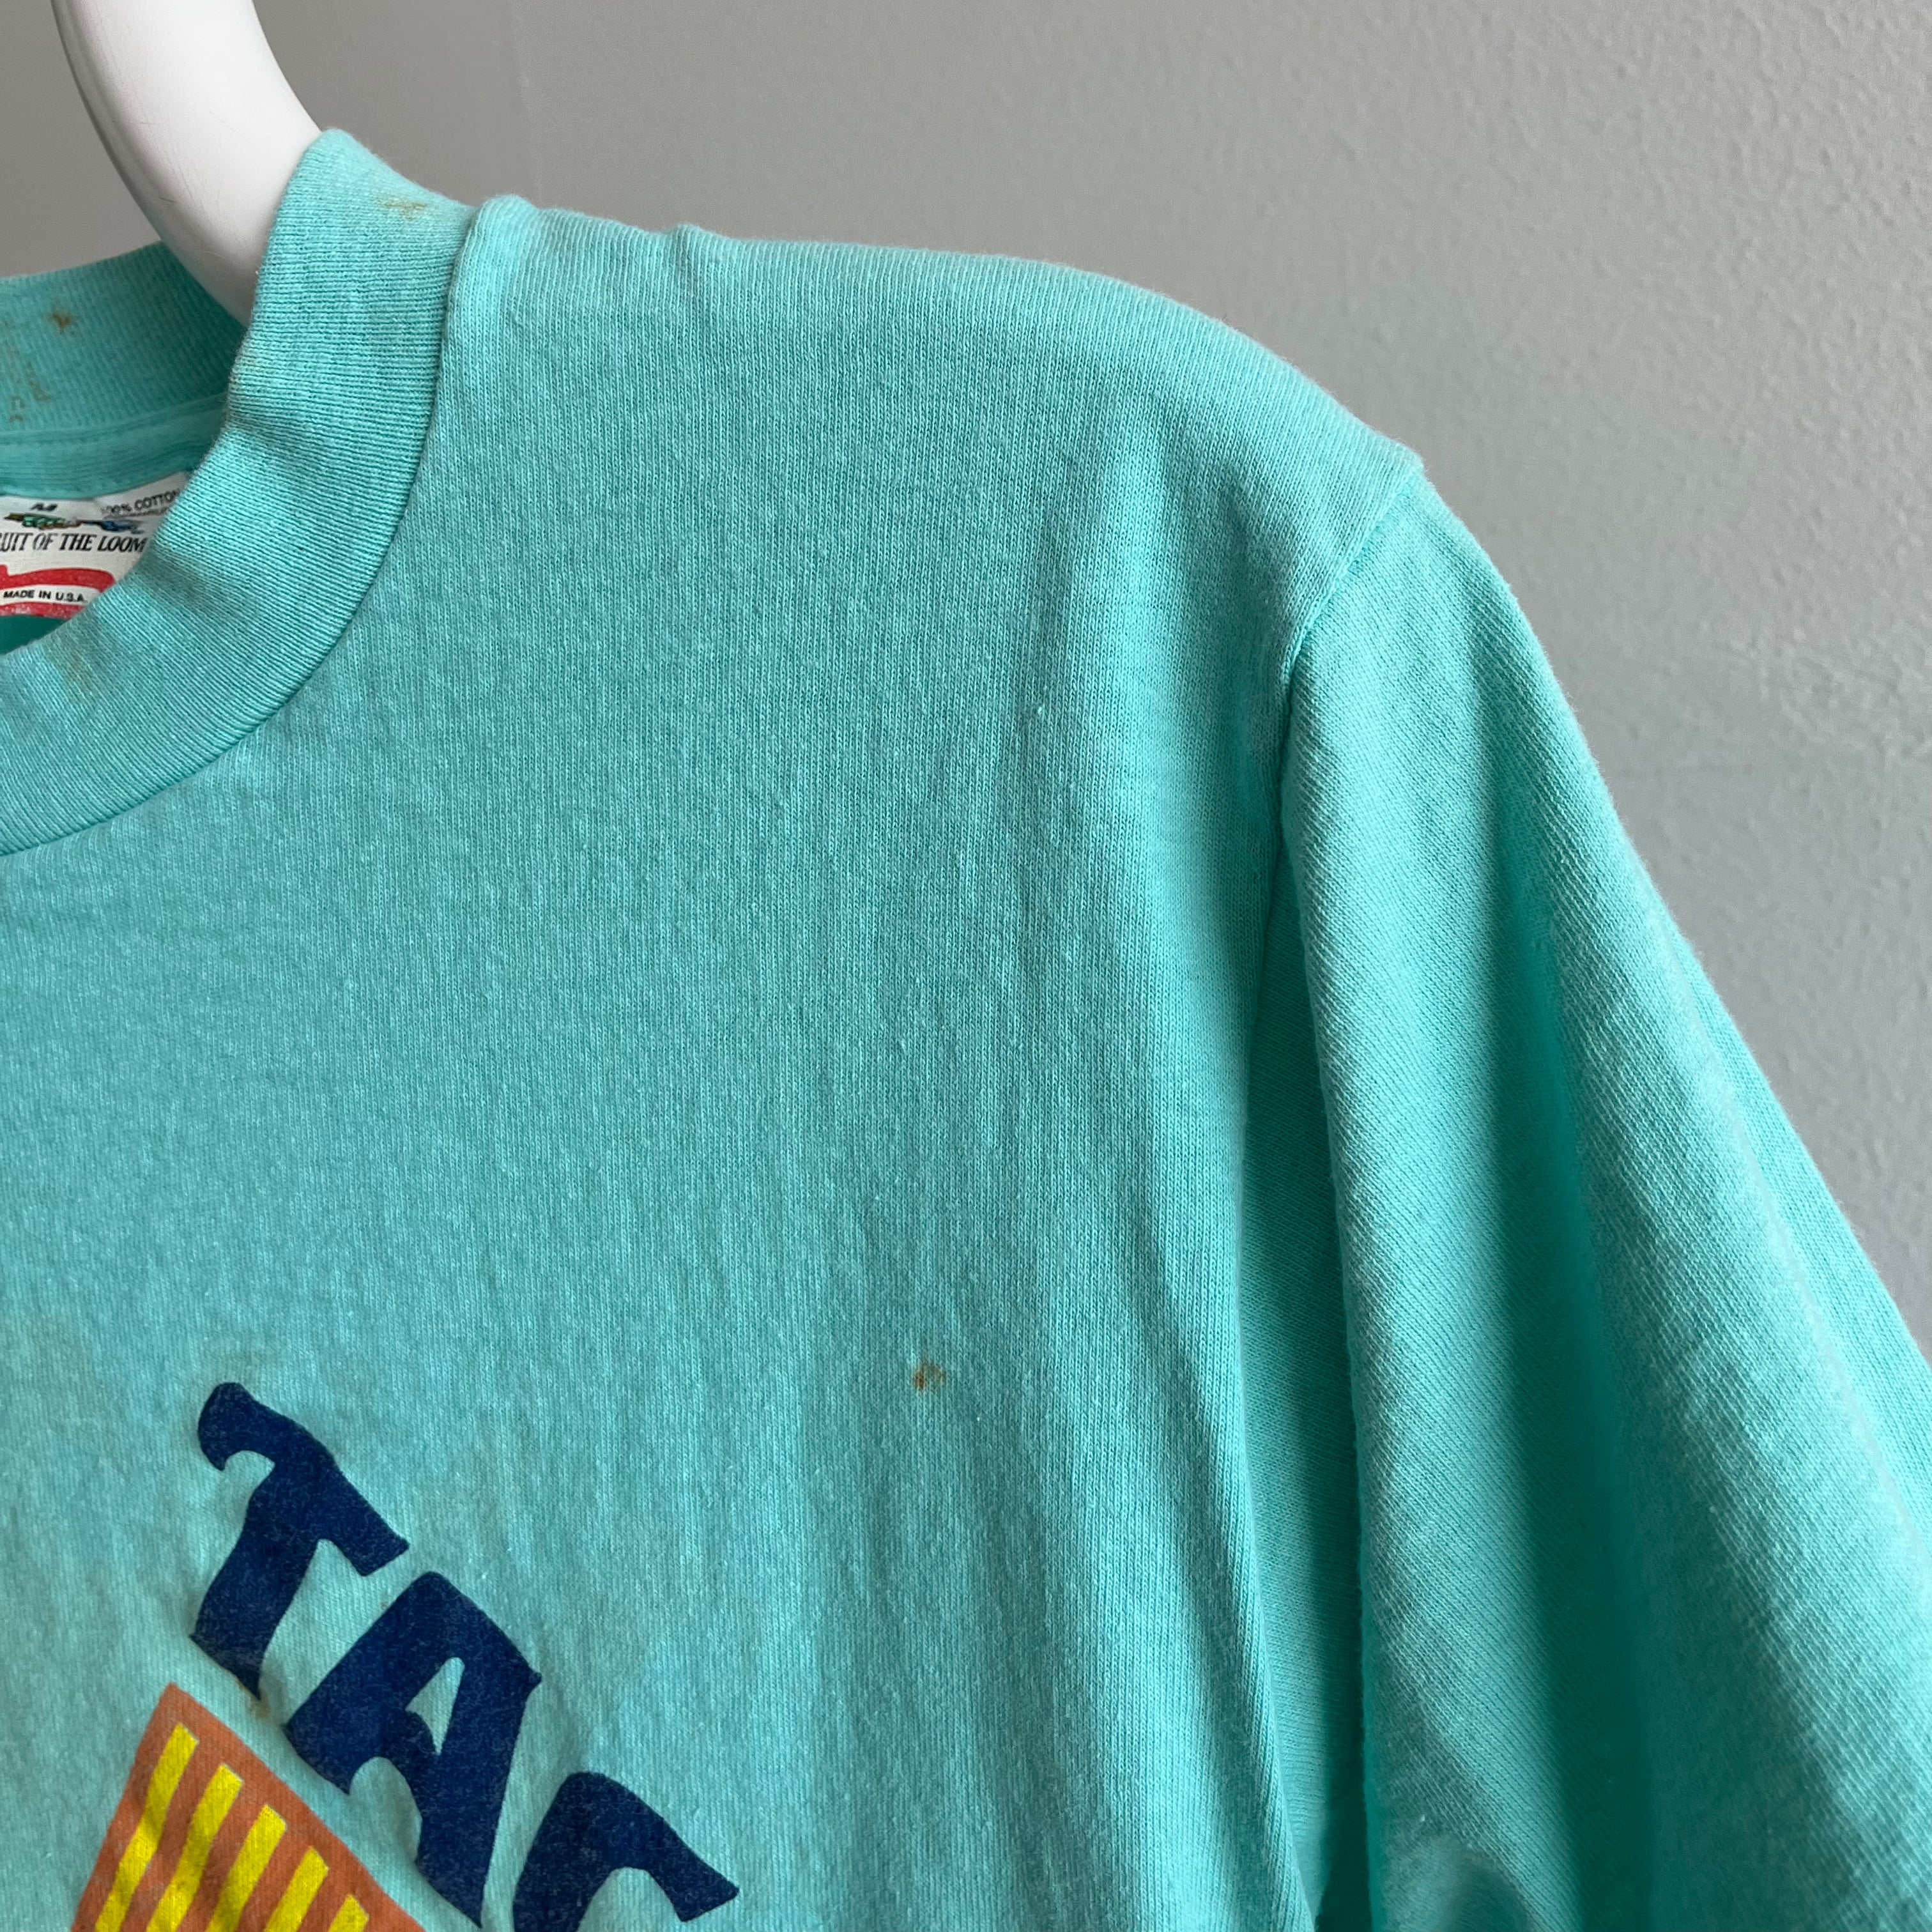 1980s Taco Bell T-Shirt by FOTL